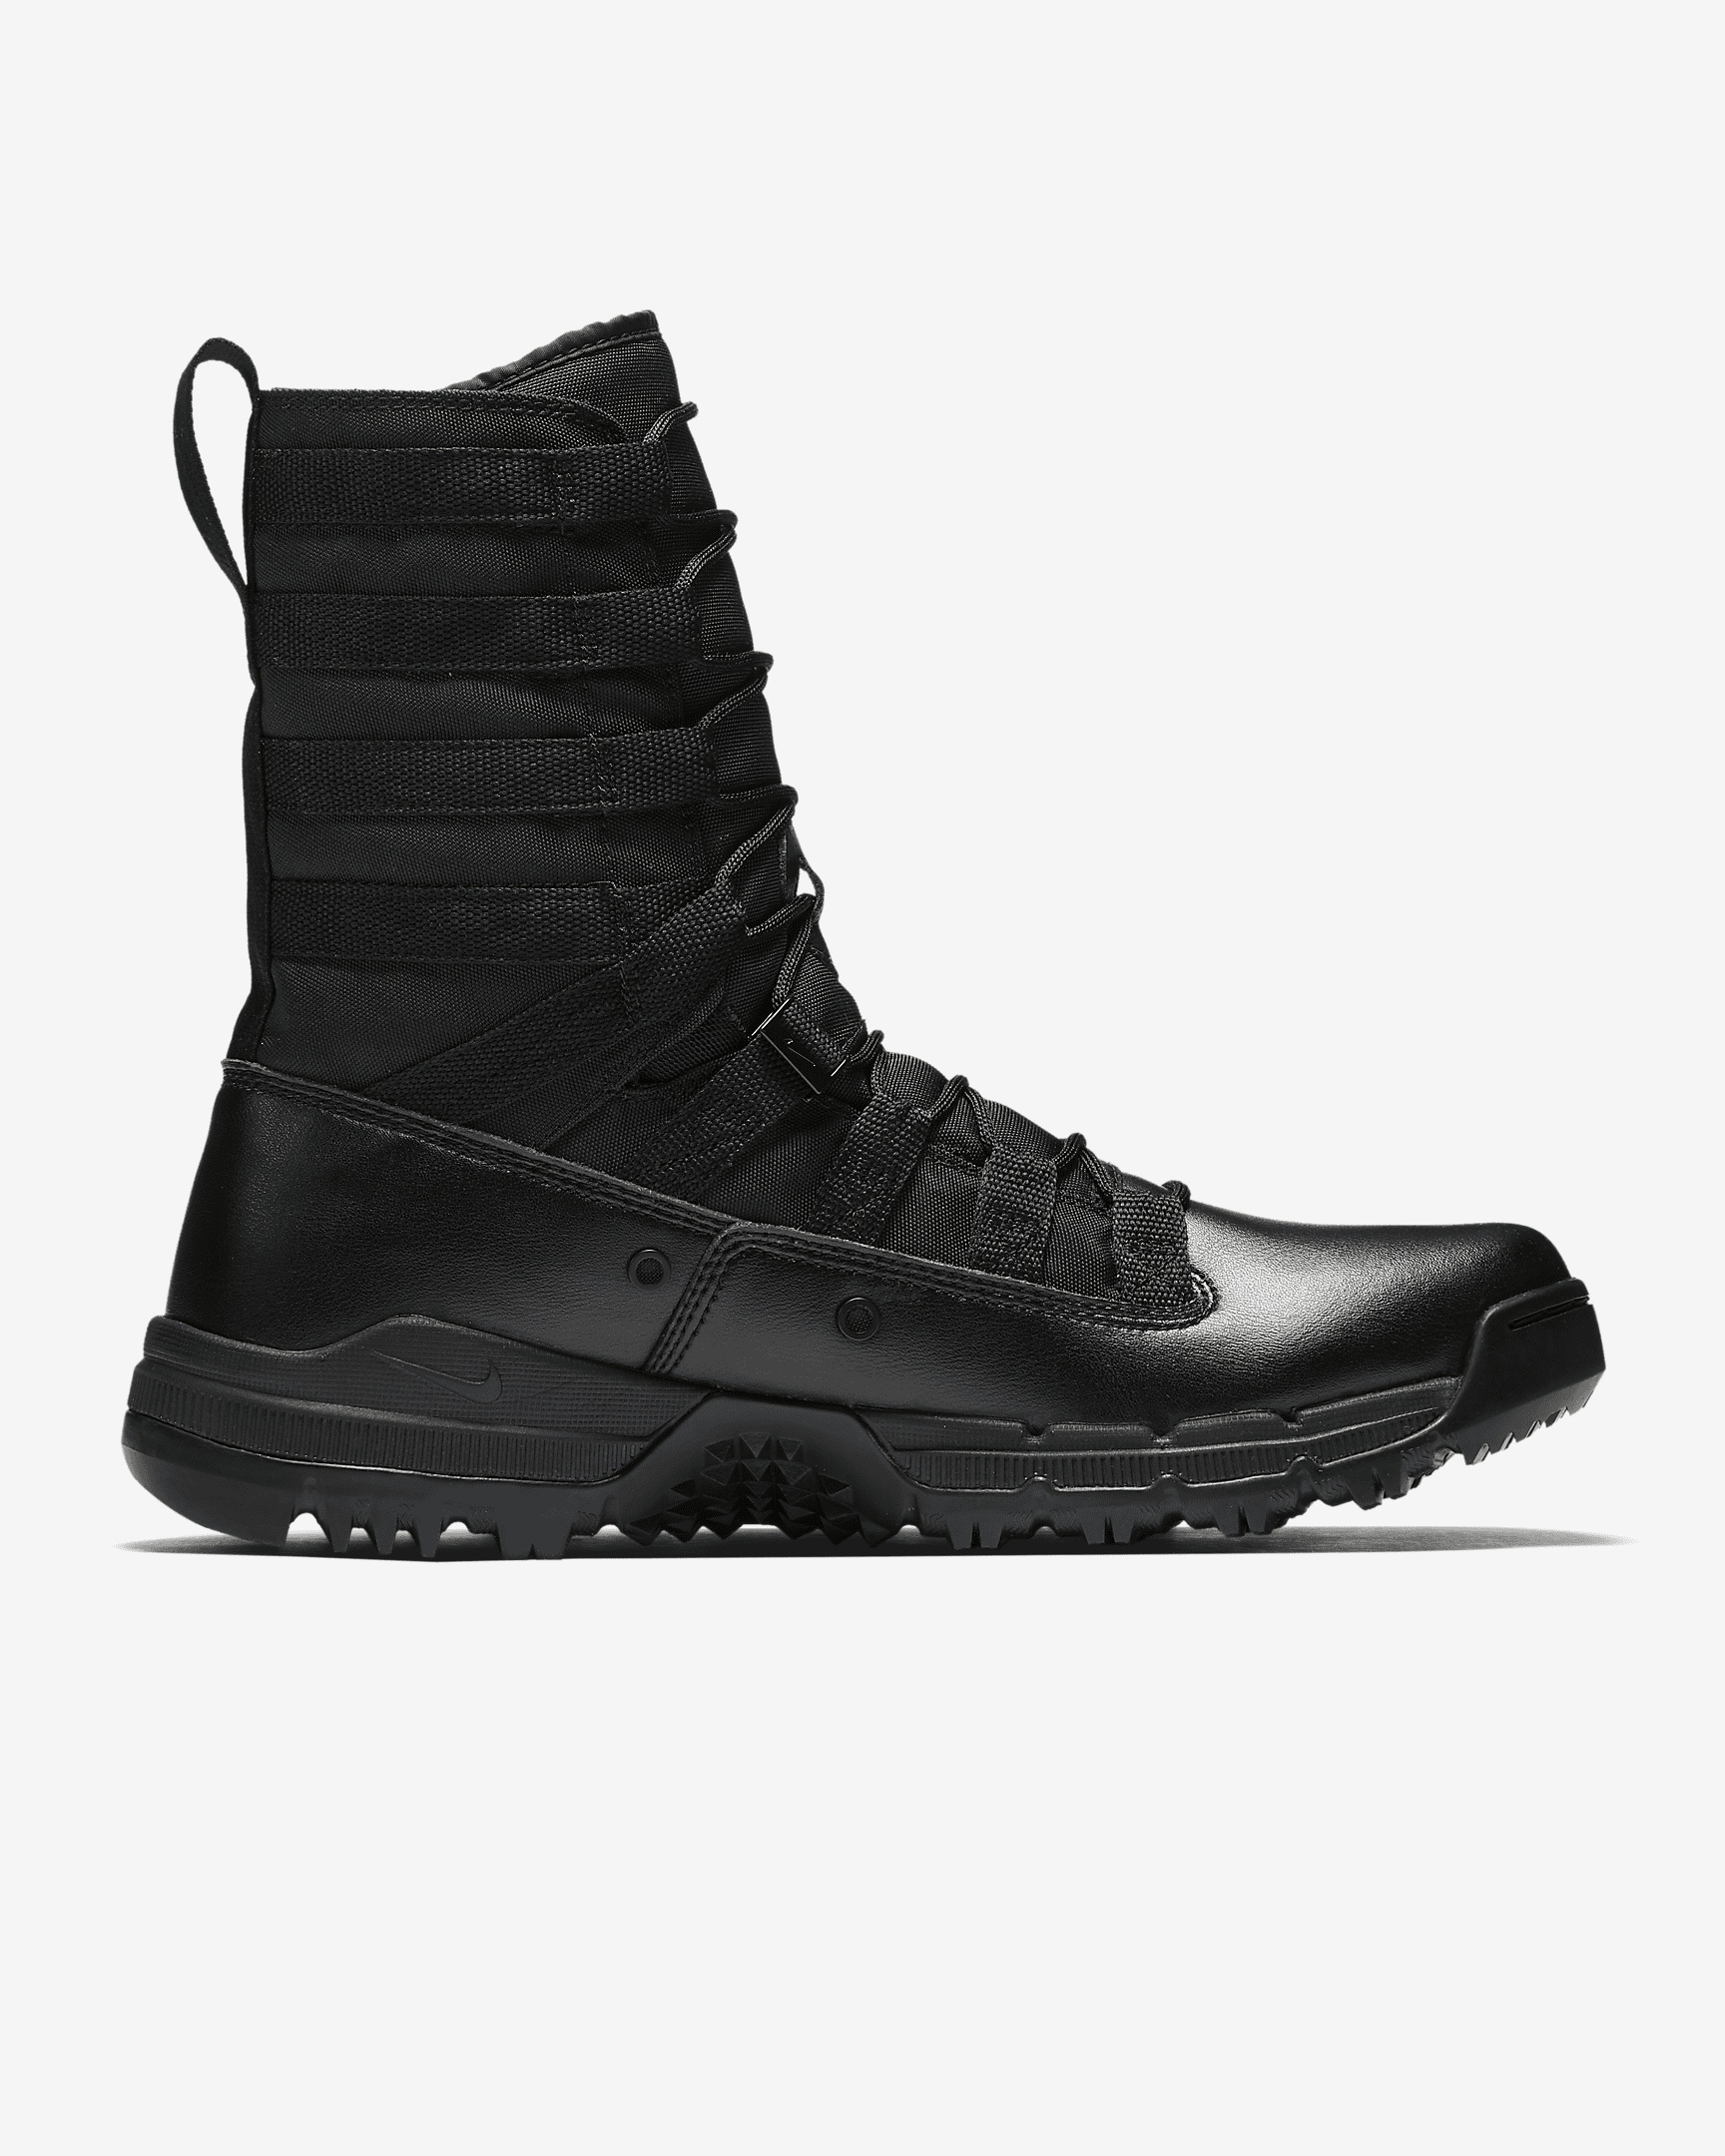 Nike SFB Gen 2 8” Tactical Boot - 3